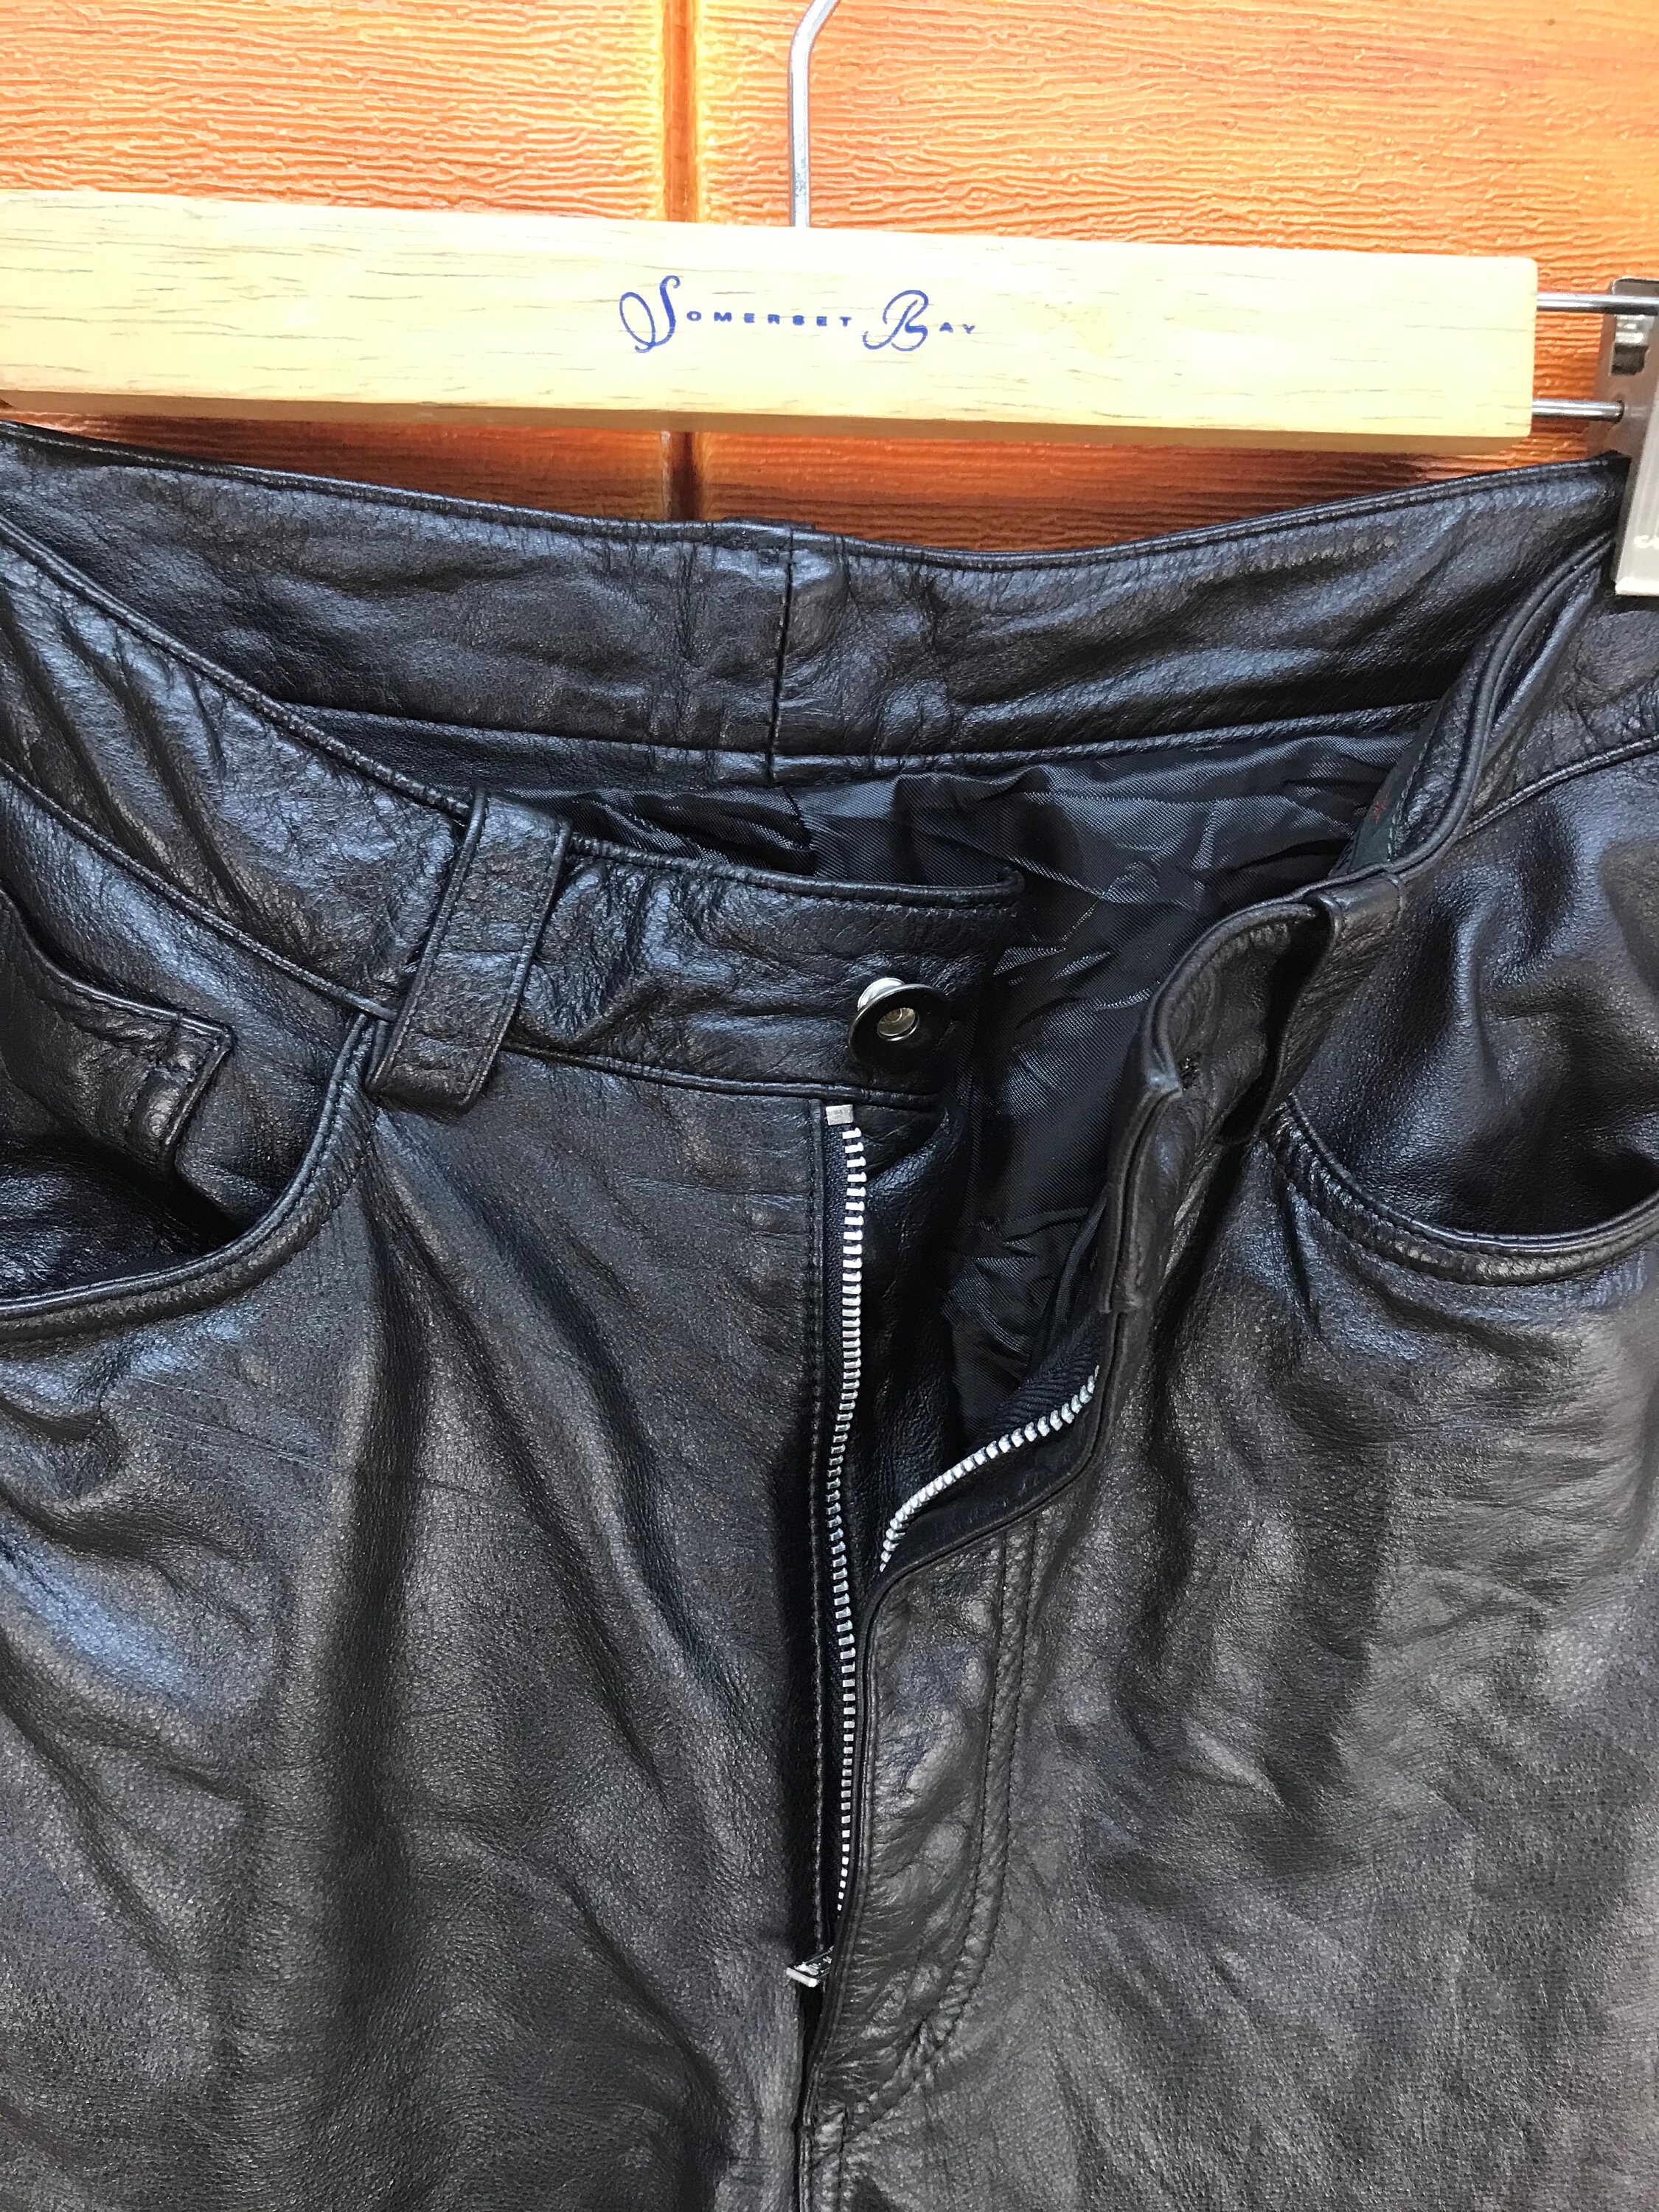 Vintage A.A.R YOHJI YAMAMOTO Leather Pants / Biker Motorcycle | Etsy